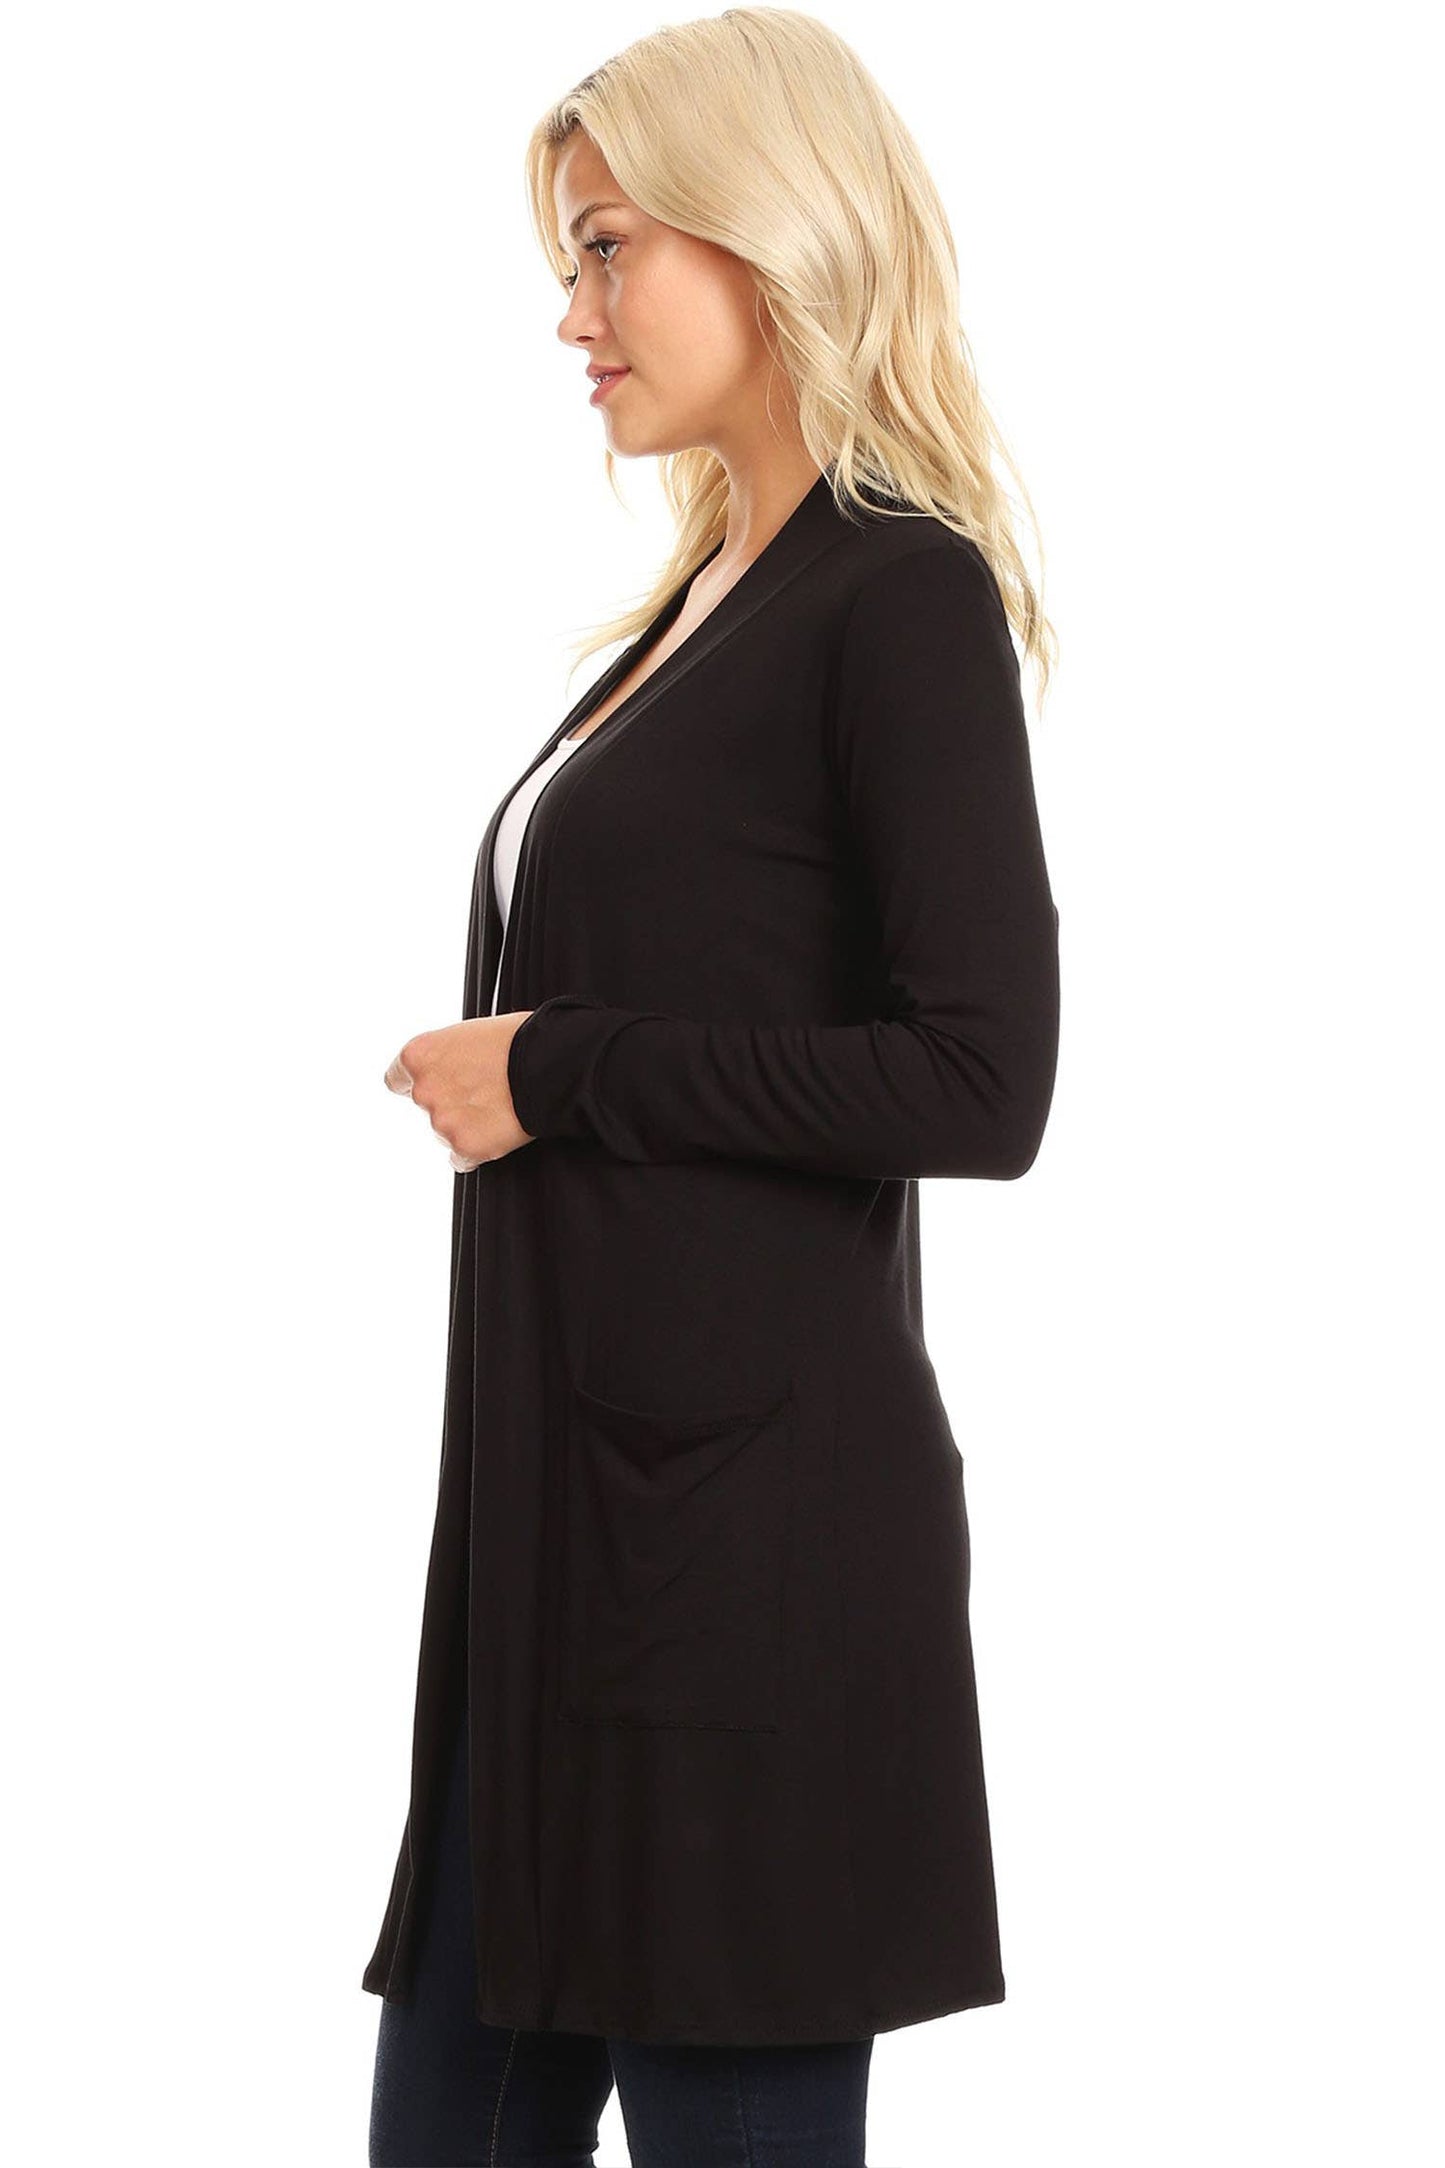 Women's Long Sleeves Side Pockets Solid Cardigan Black